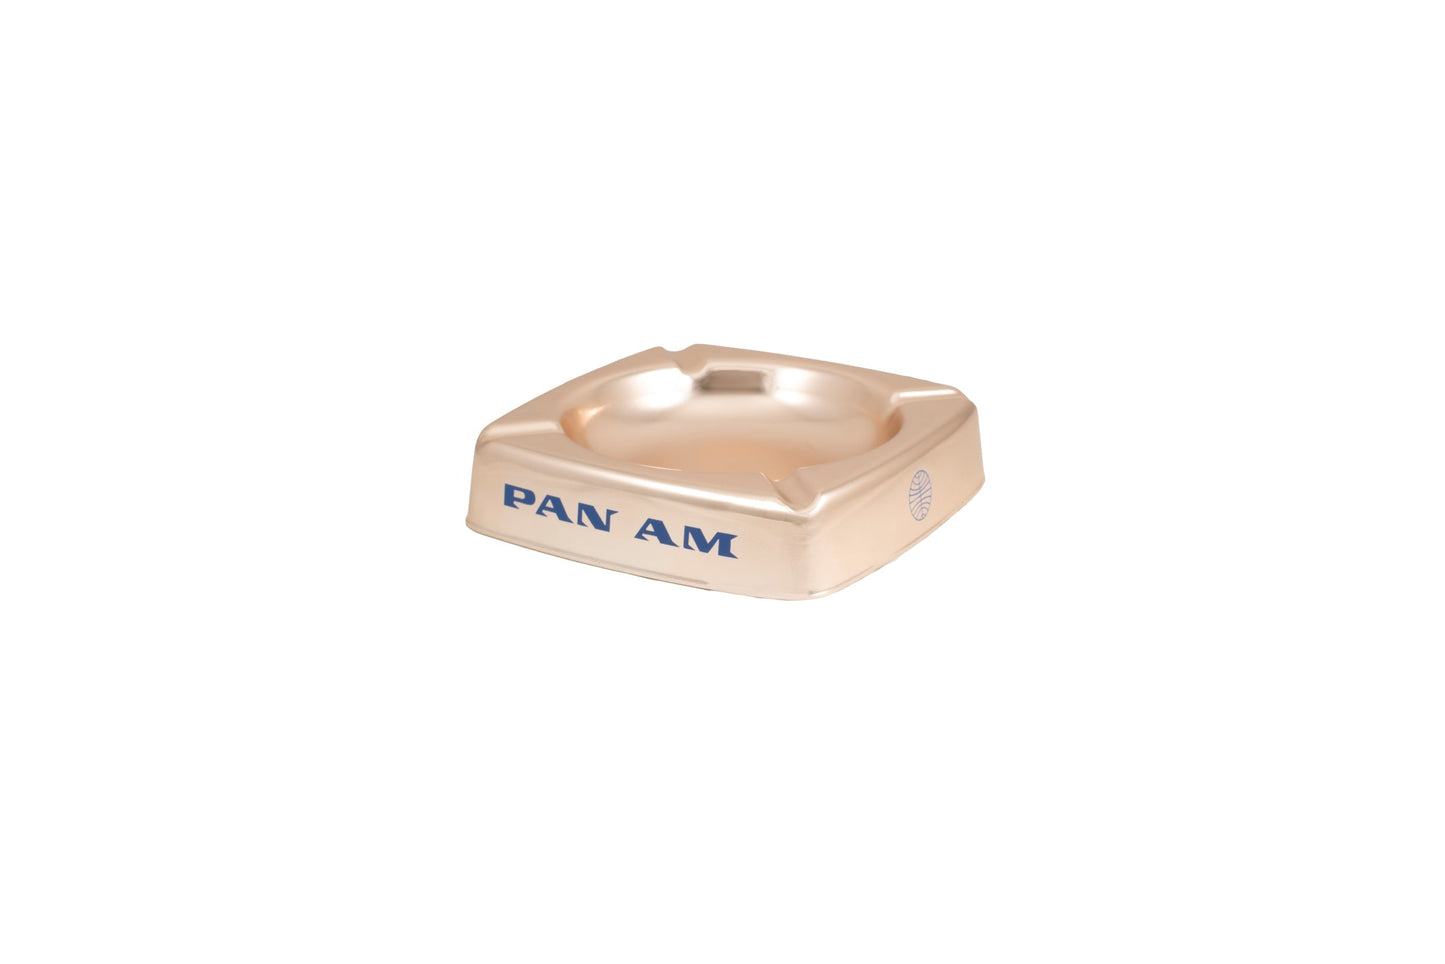 Pan-Am Ashtray by Arsmetallo